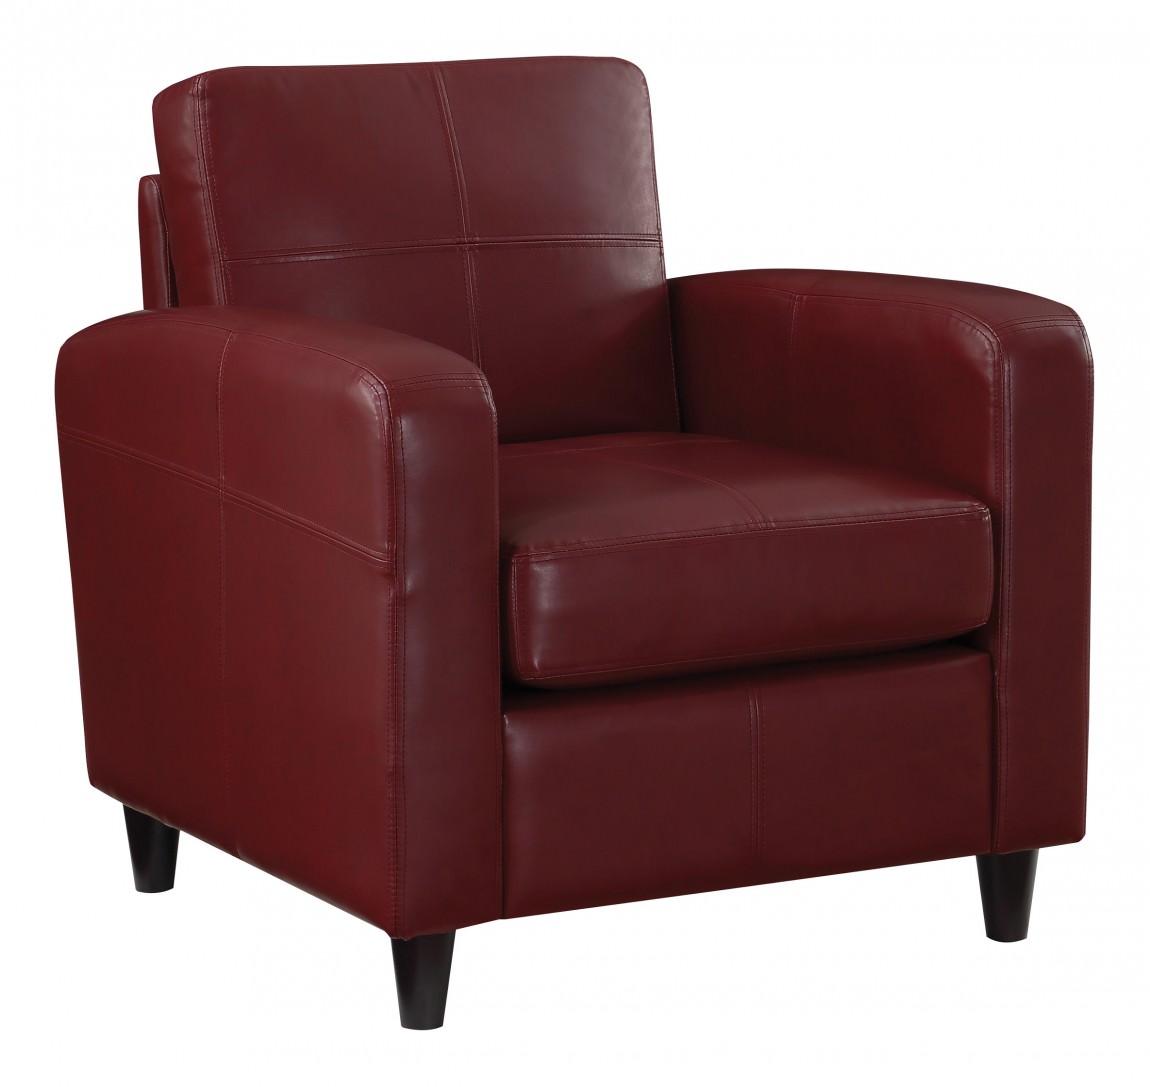 33 X 33 High Density Upholstery Foam Cushion chair Cushion Square